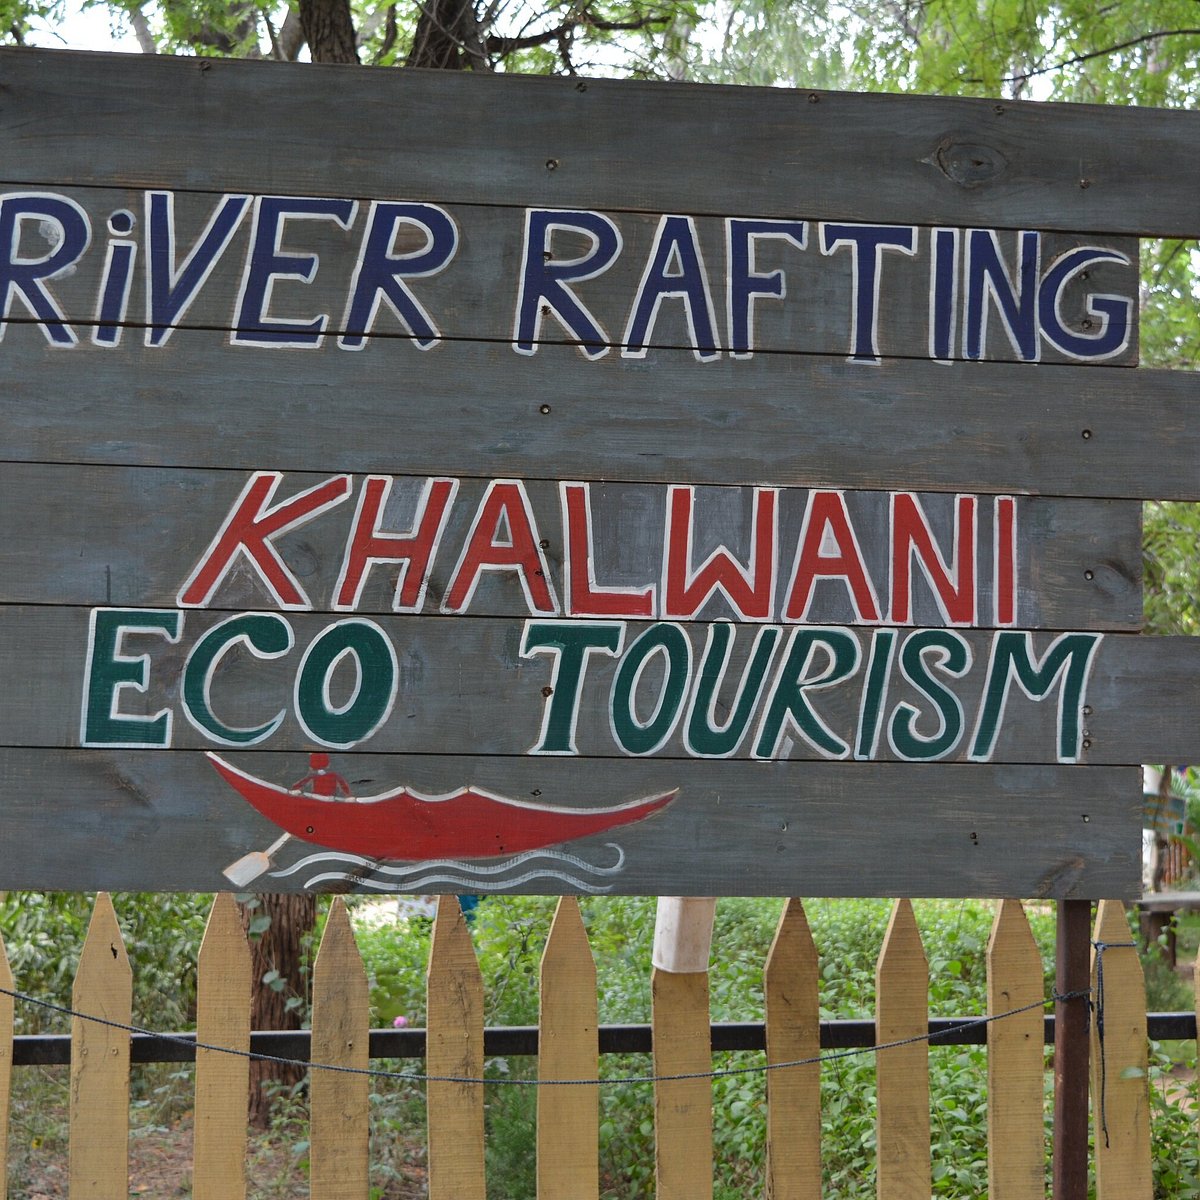 eco tourism meaning in punjabi